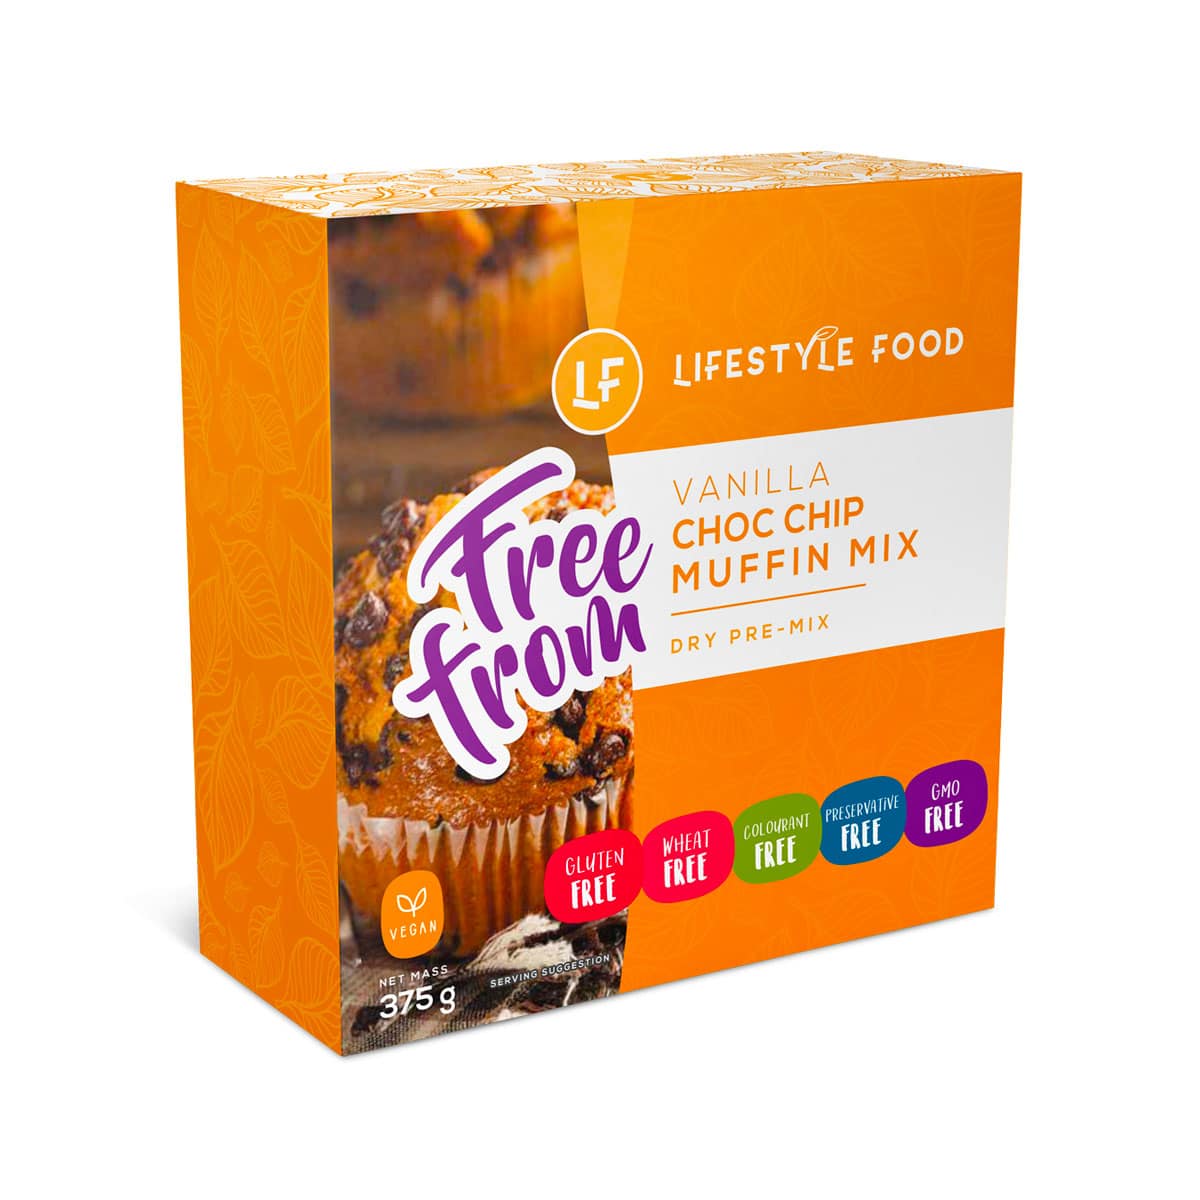 Lifestyle Food Gluten Free Vanilla Choc Chip Muffin Mix - 375g